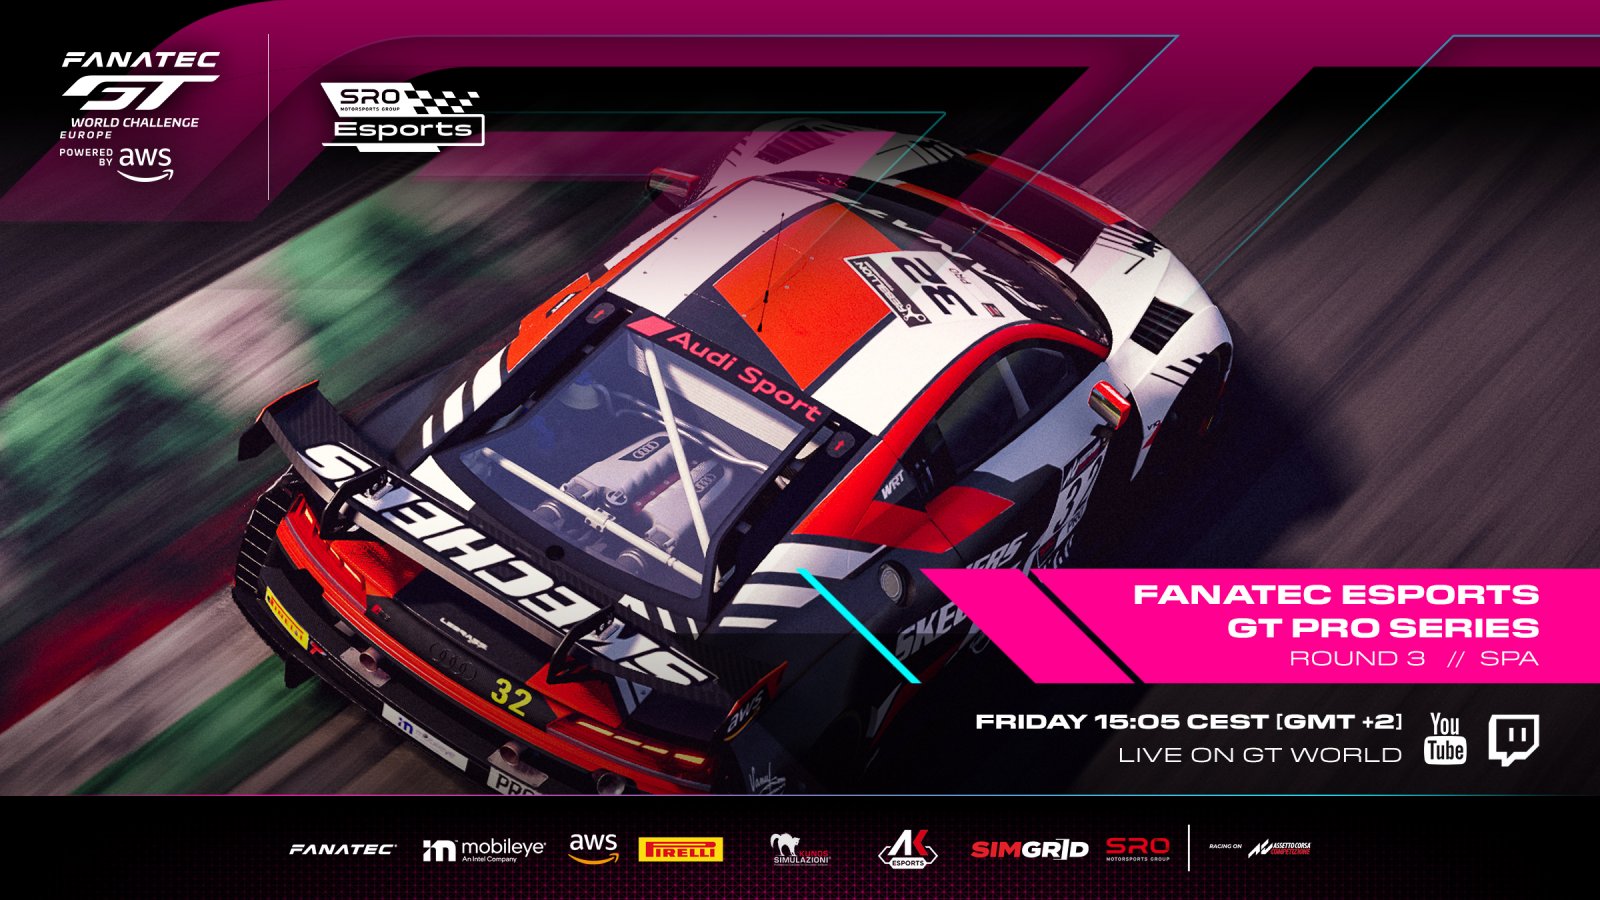 Legendary Spa-Francorchamps awaits Fanatec Esports GT Pro Series racers